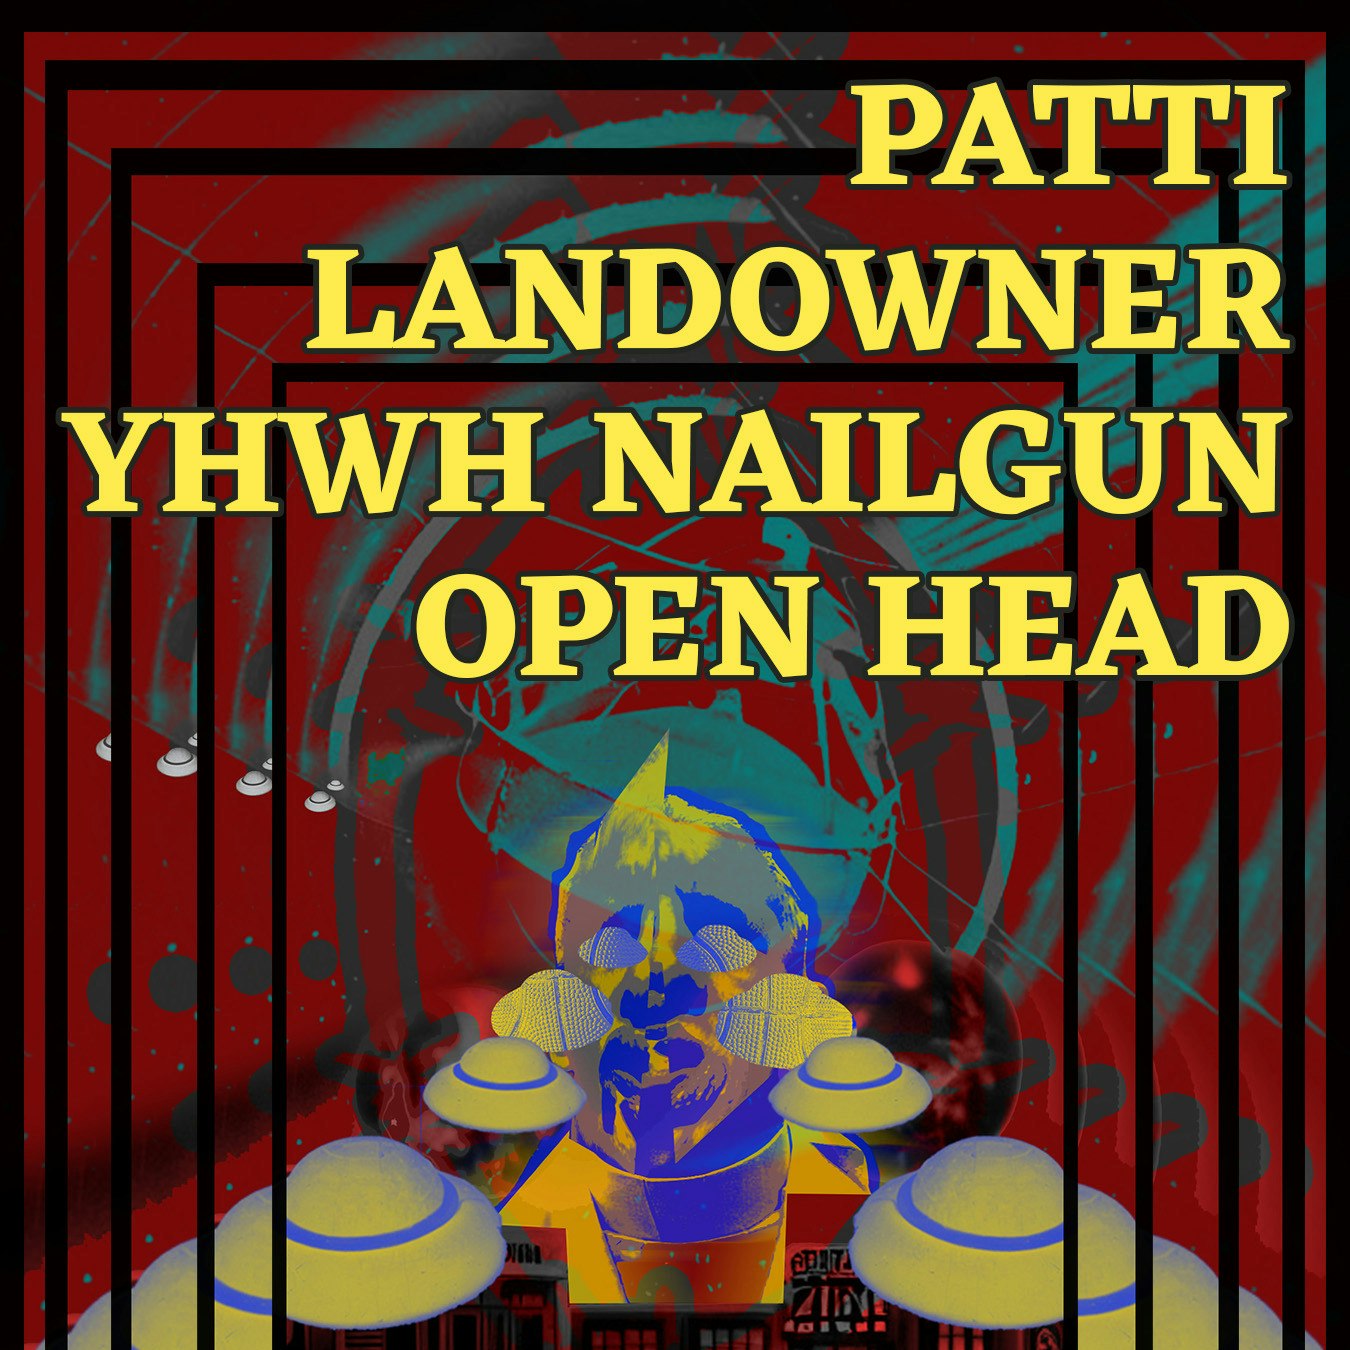 Patti, Landowner, YHWH Nail Gun, Open Head